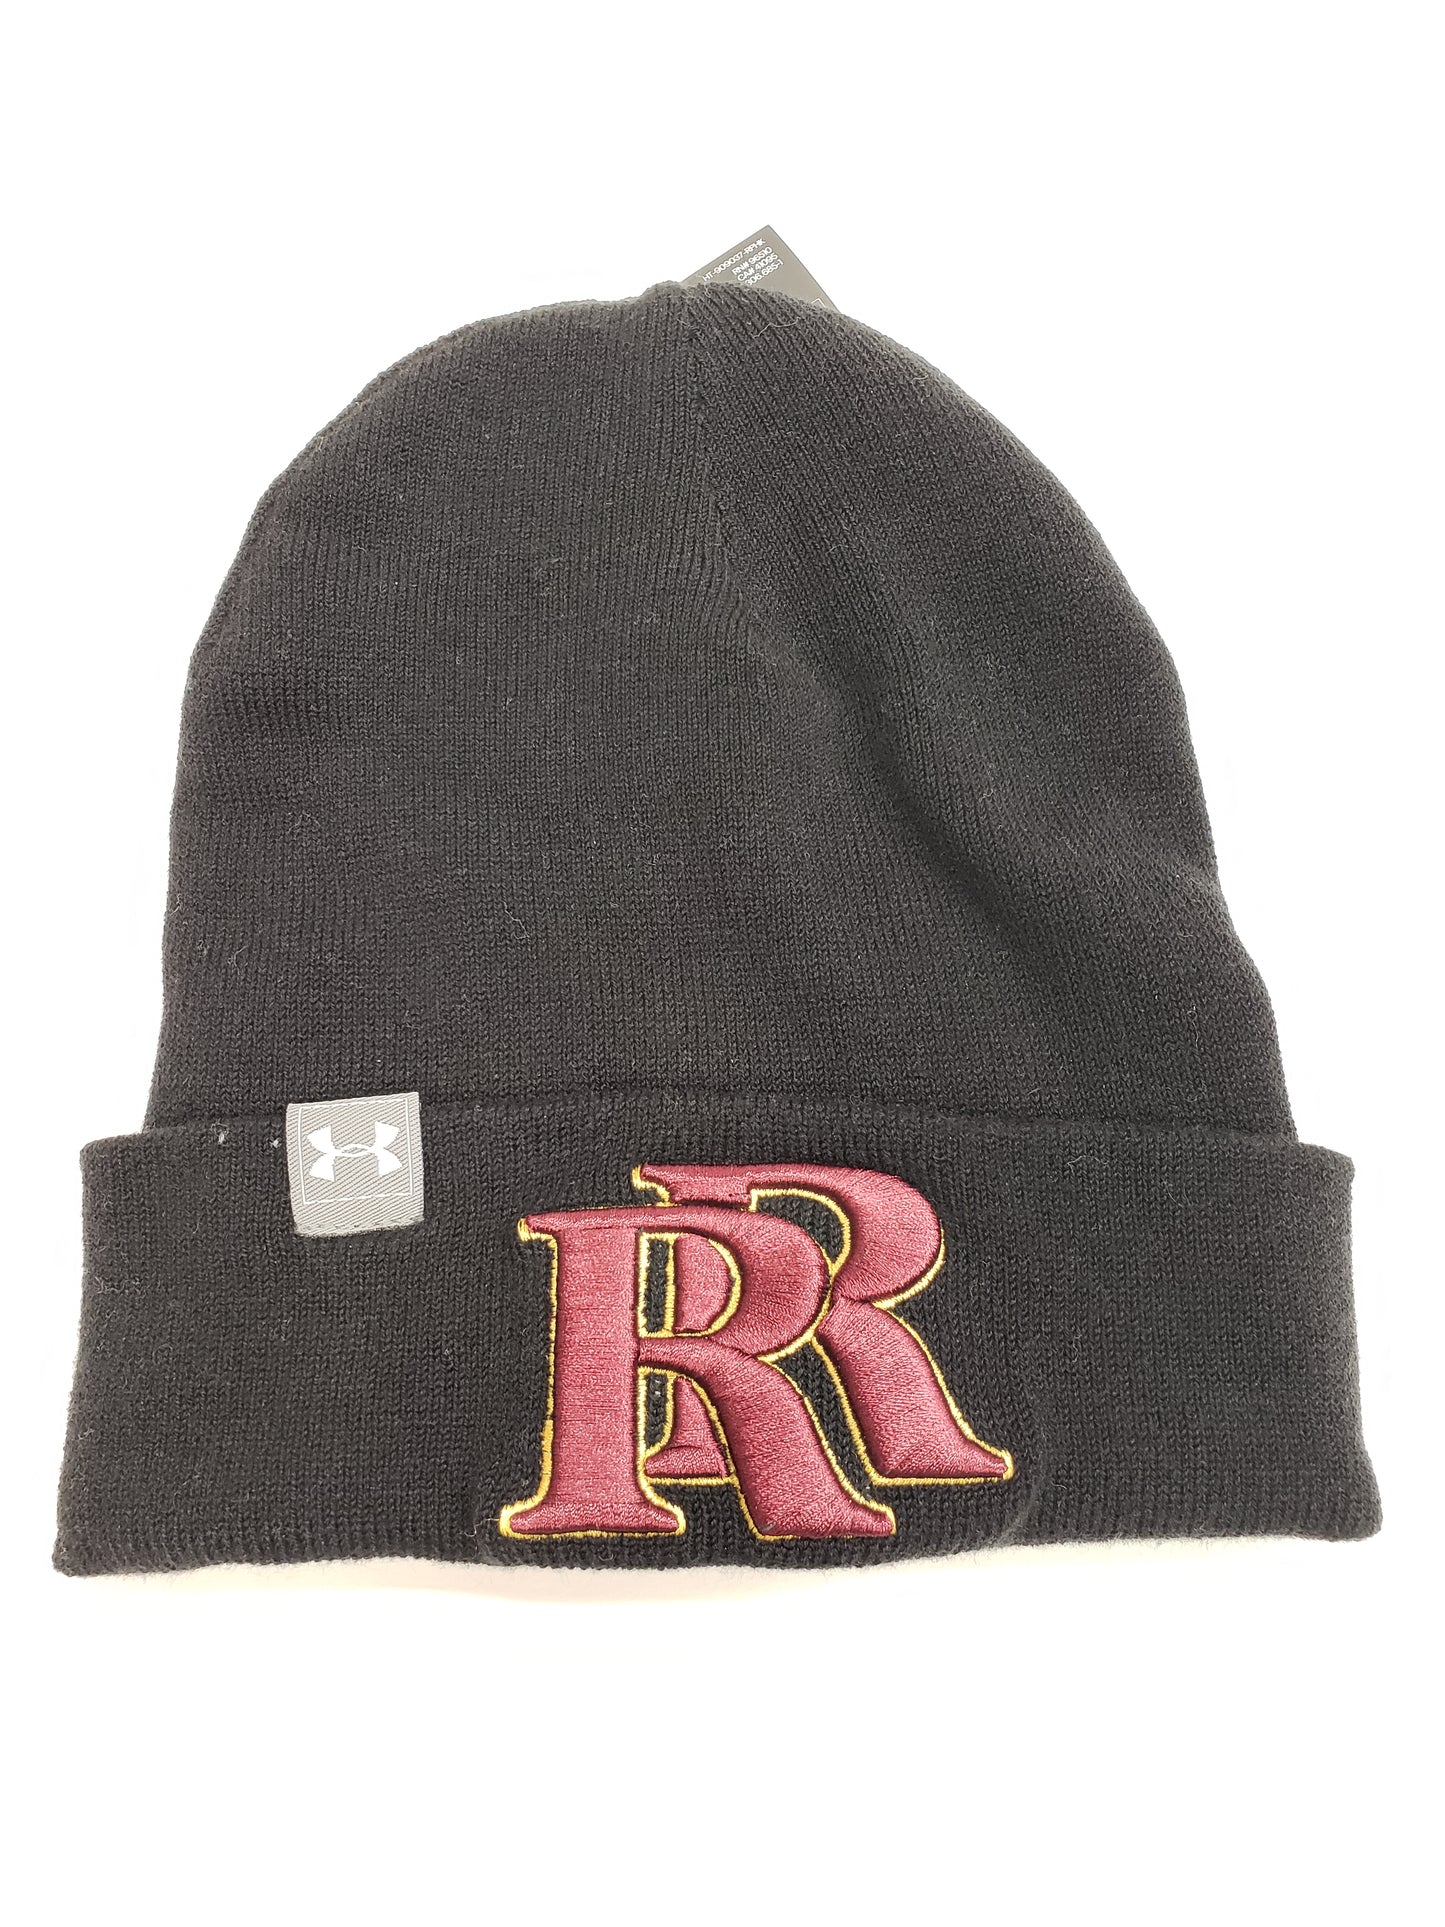 RR Under Armour Knit Hat